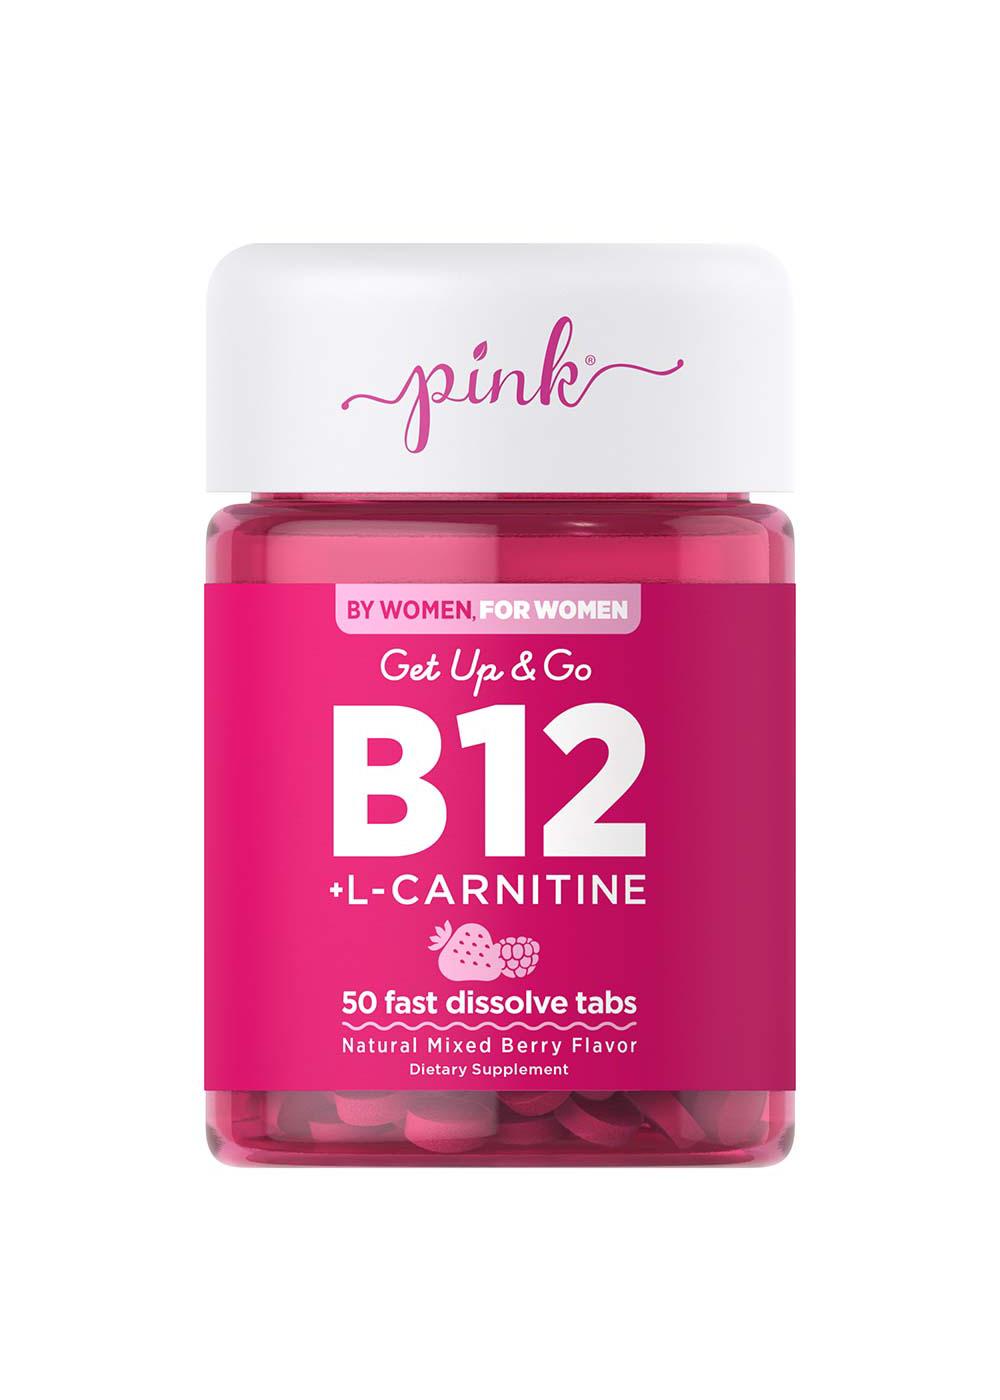 Pink Get Up & Go B12 + L-carnitine; image 1 of 2